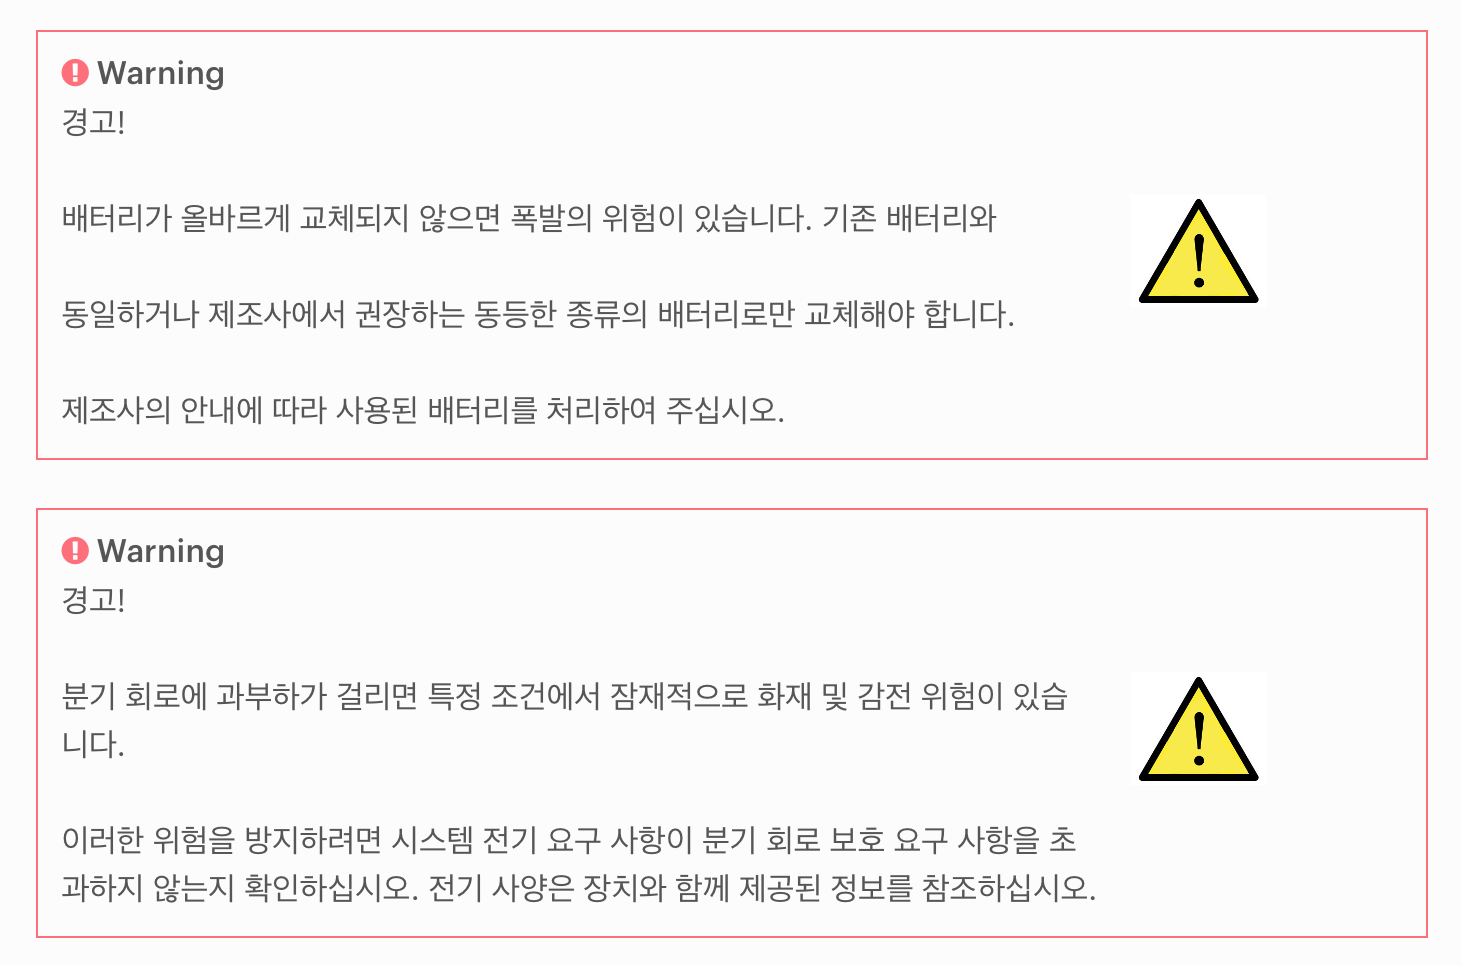 _images/korean-warnings-2.png